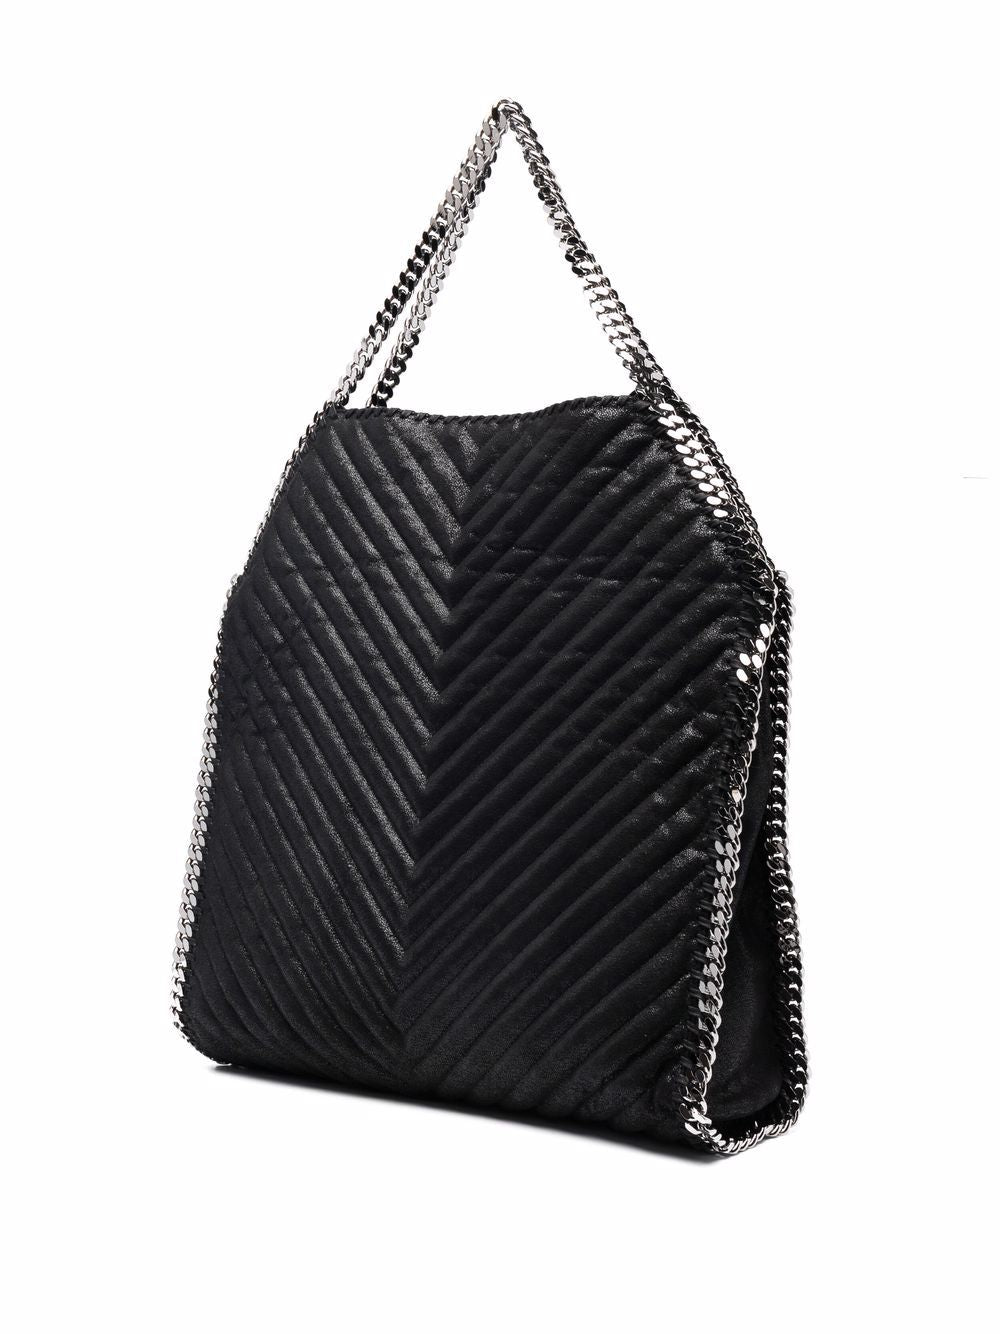 Black faux leather large Falabella chevron tote bag